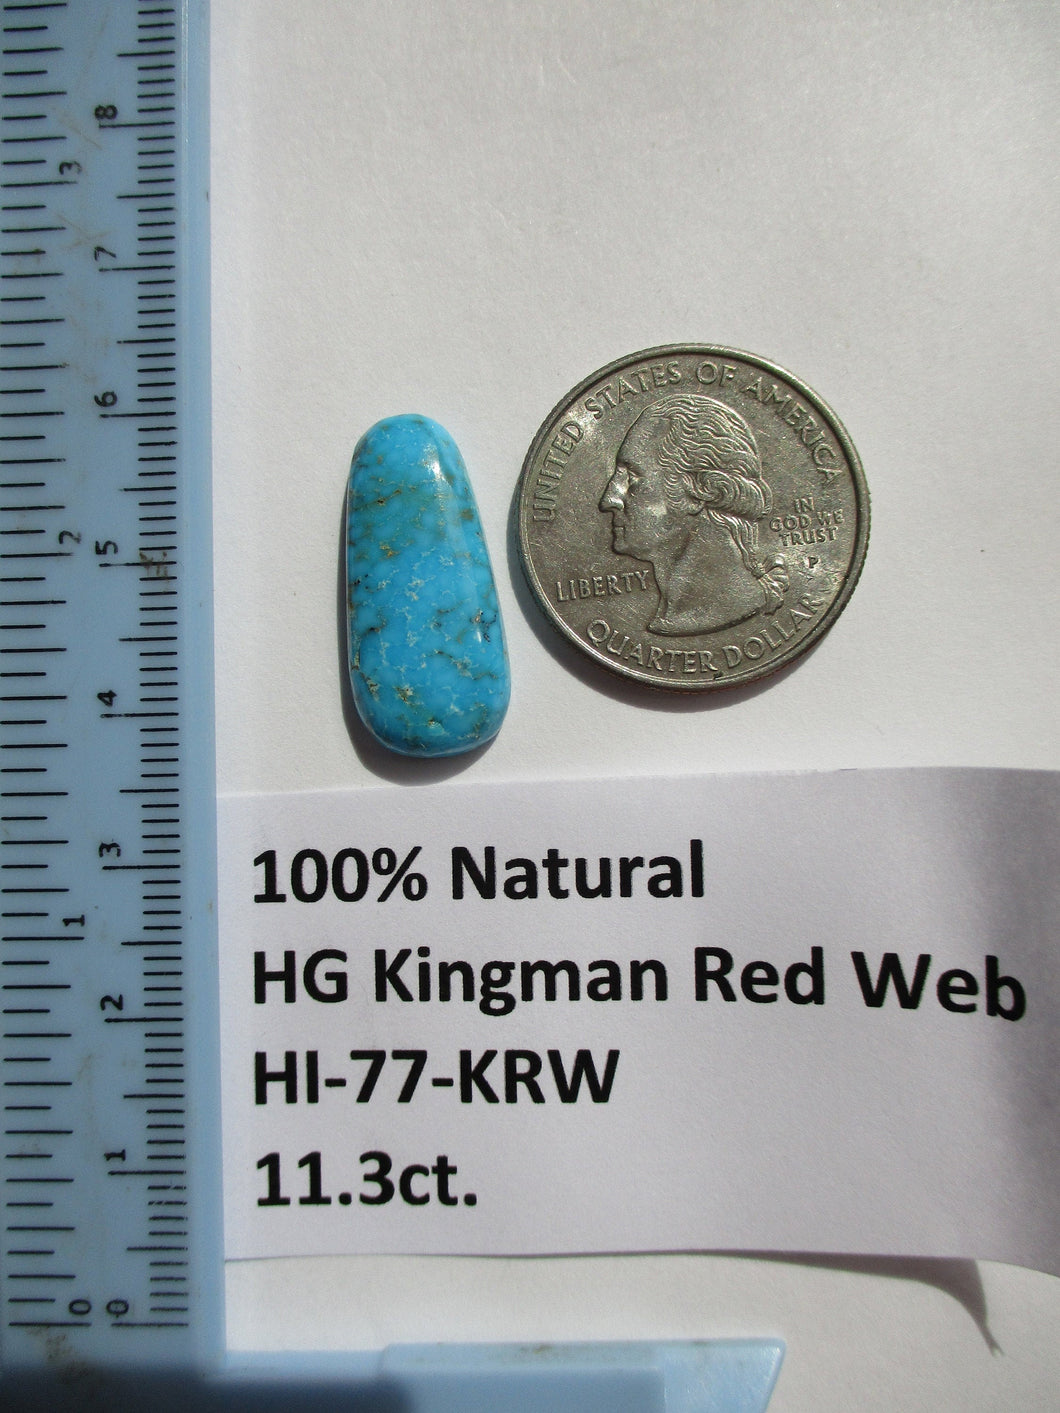 11.3 ct. (24x11x5 mm) 100% Natural High Grade Kingman Red Web Turquoise Cabochon Gemstone, # HI 77